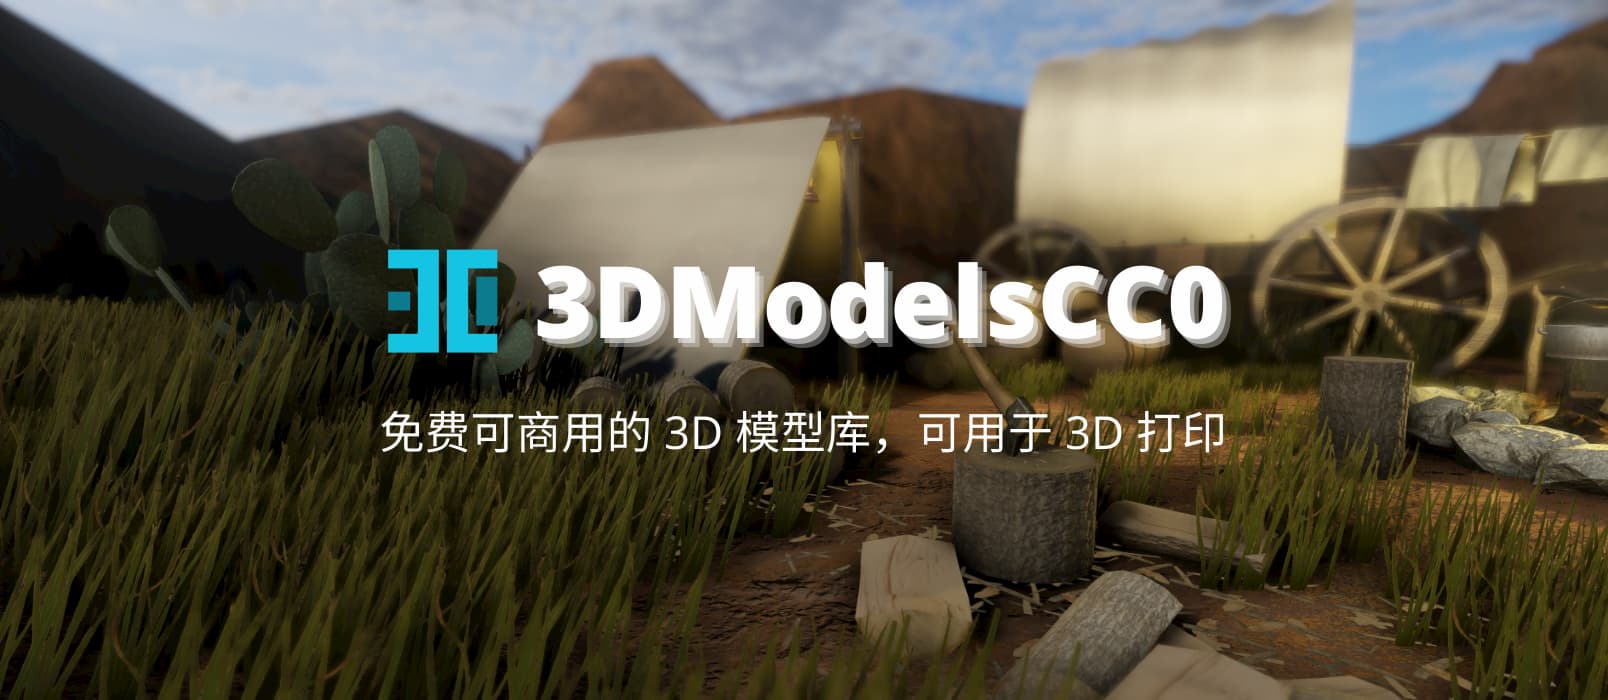 3DModelsCC0 网站是一个 3D 模型库
